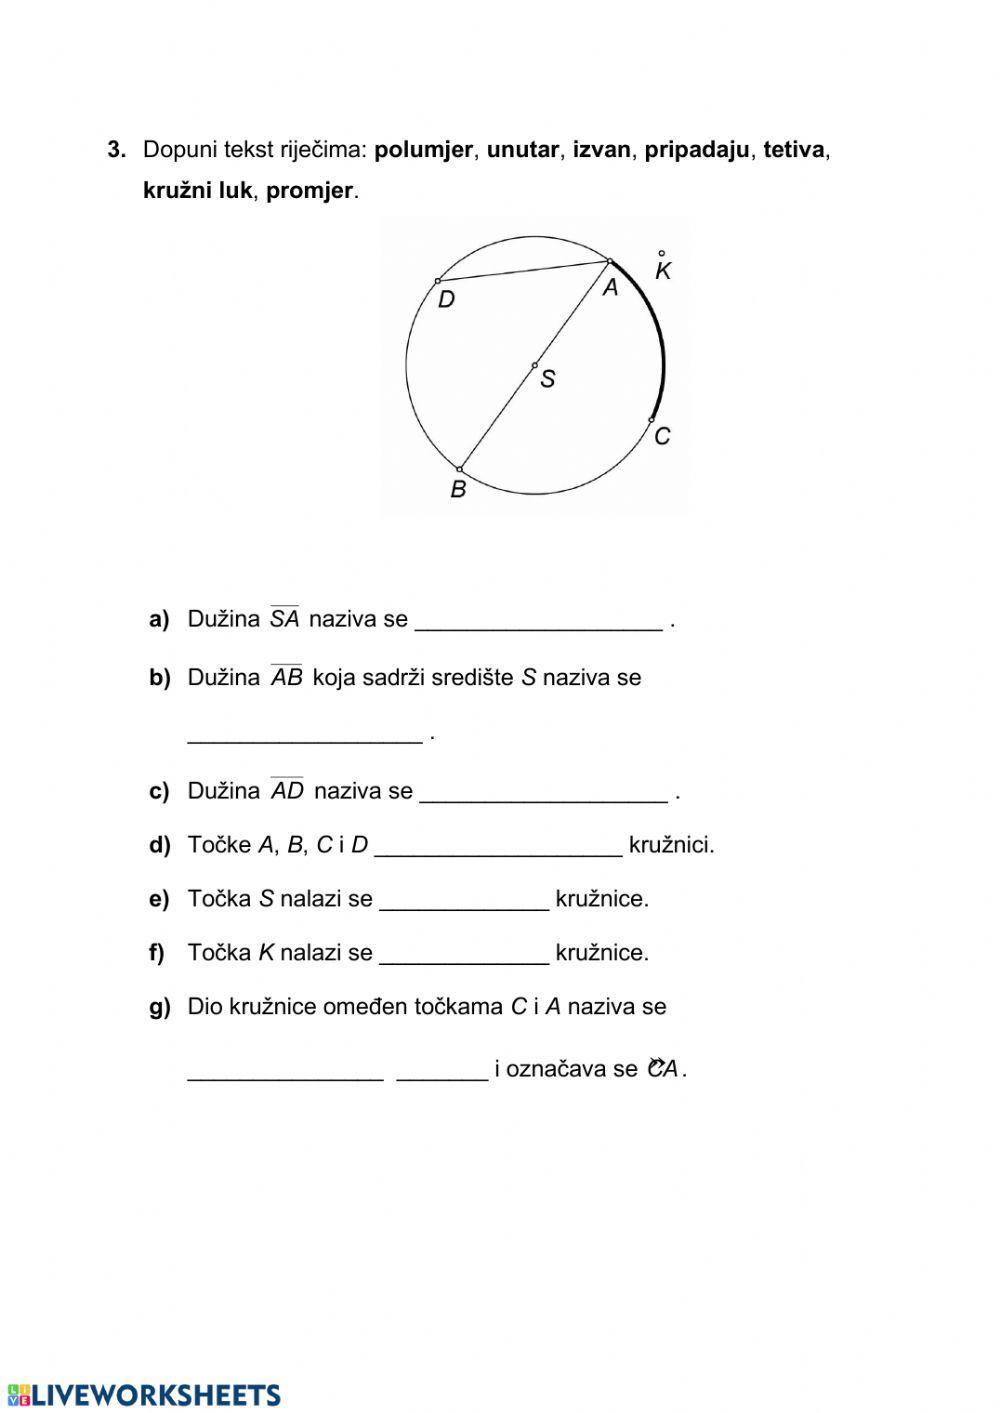 Krug i kružnica - osnovni pojmovi, međusobni položaji kružnice i kruga